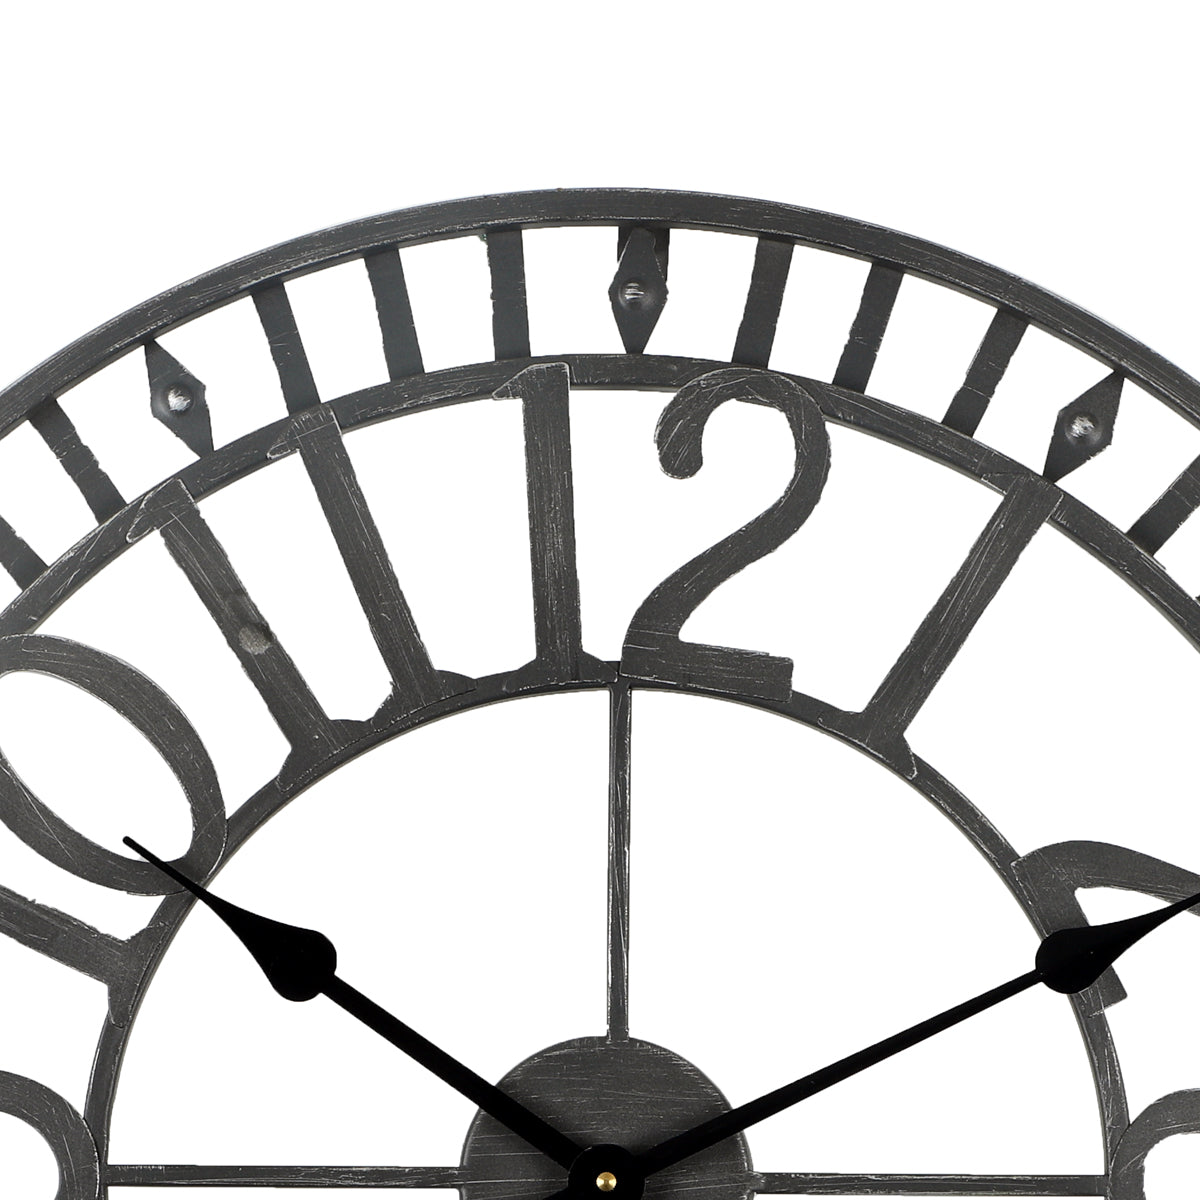 Loft97 CL41BK Manhattan Industrial Wall Clock, Analog, Black, 24